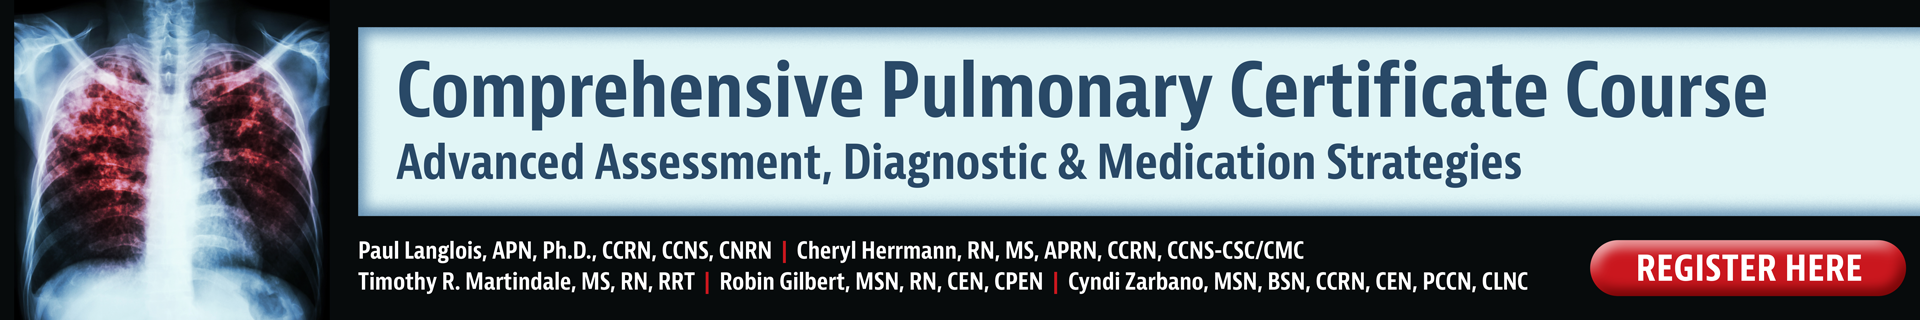 Comprehensive Pulmonary Certificate Course: Advanced Assessment, Diagnostic & Medication Strategies